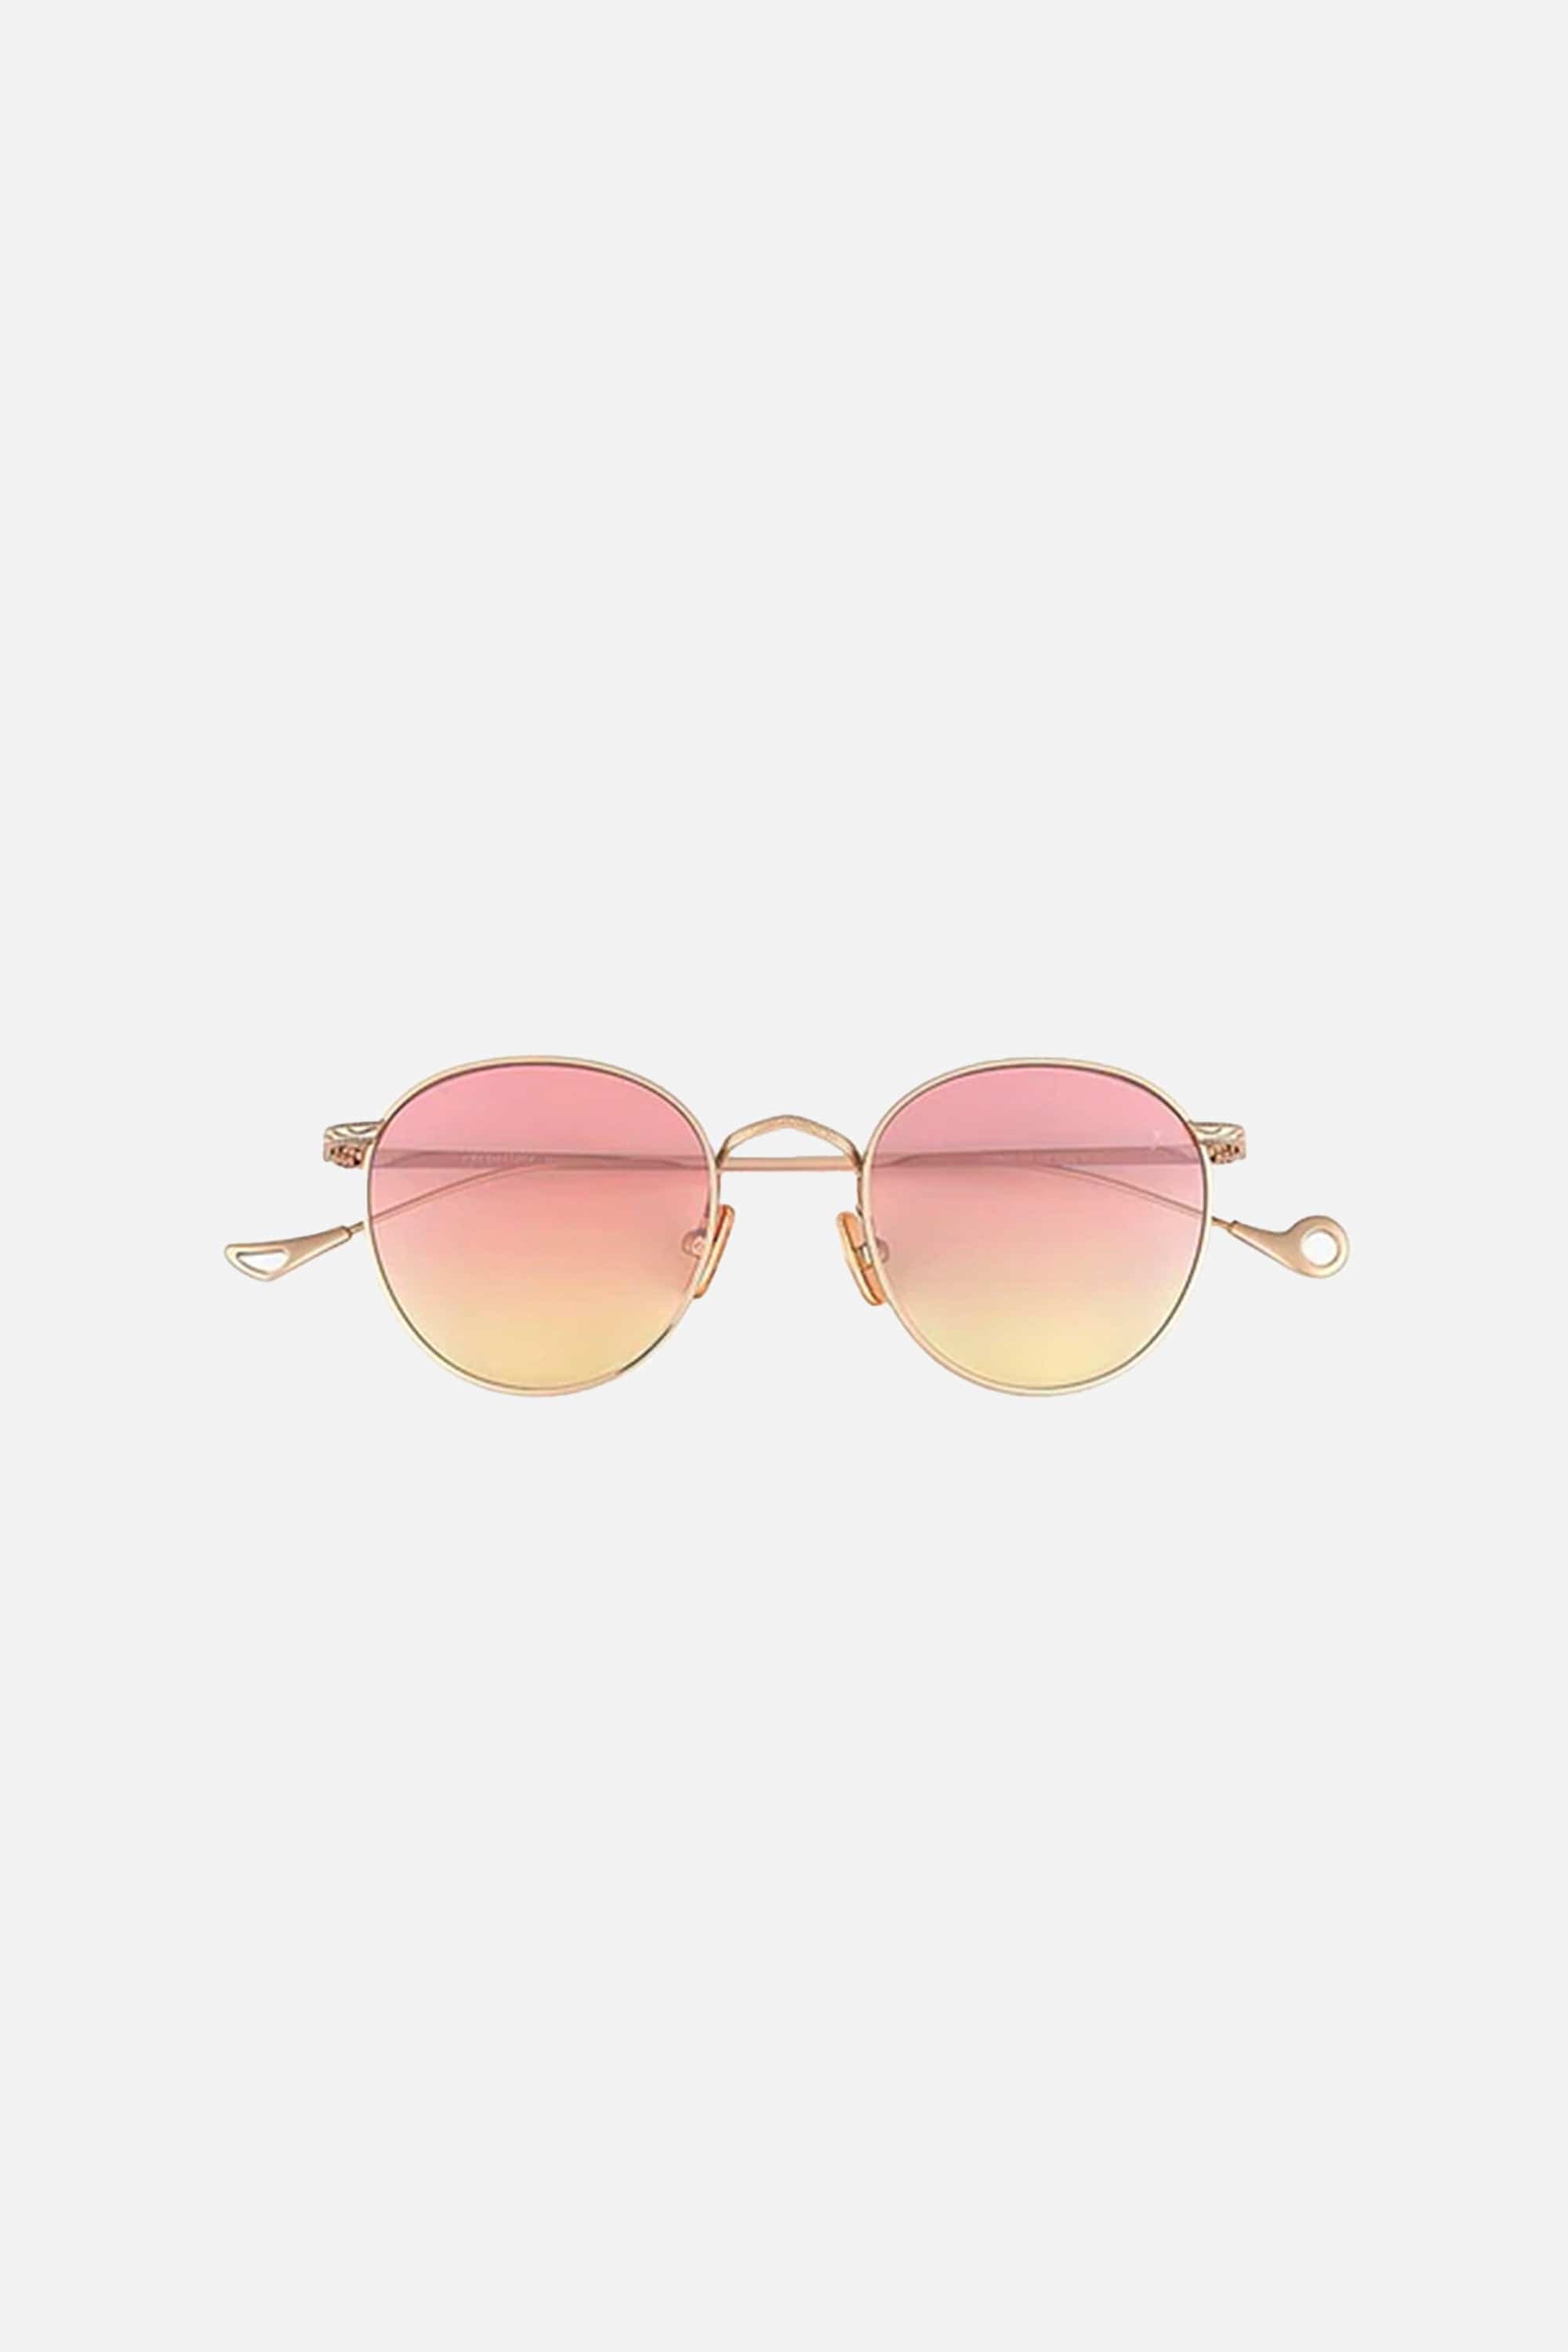 Eyepetizer round rose gold sunglasses - Eyewear Club